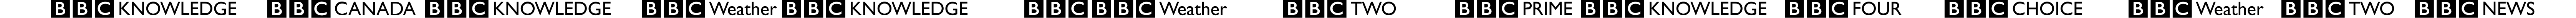 Пример написания шрифтом BBC Striped Channel Logos текста на французском